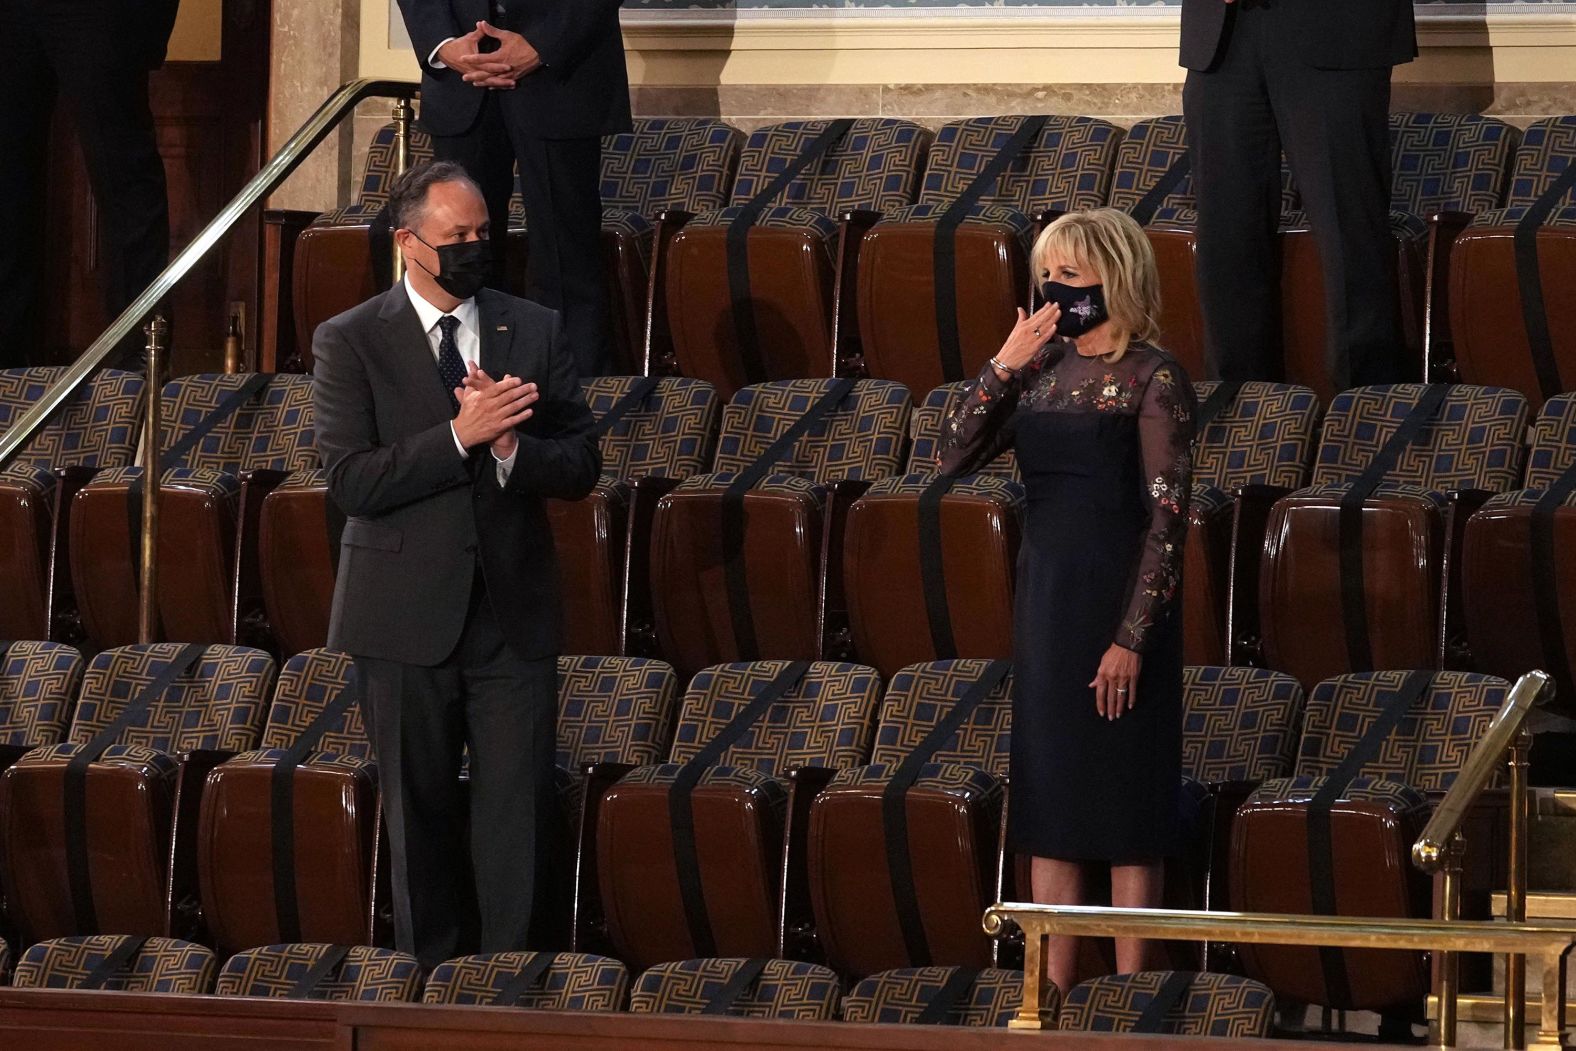 First lady Jill Biden, next to second gentleman Doug Emhoff, gestures to her husband at the beginning of the speech.